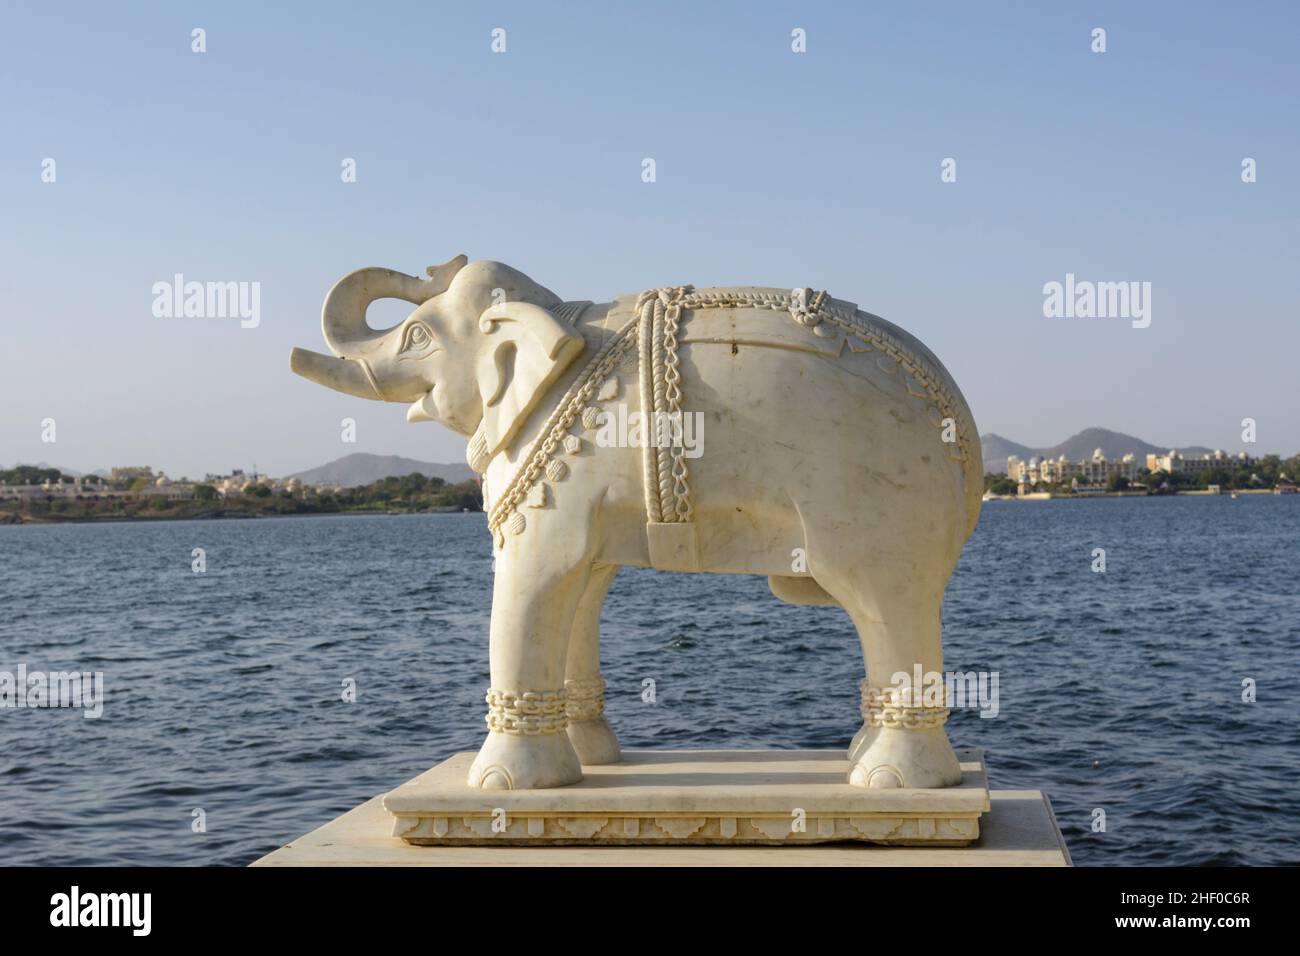 Statua dell'elefante al palazzo di Jag Mandir sull'isola di Jagmandir, Lago Pichola, Udaipur, Rajasthan, India, Asia meridionale Foto Stock